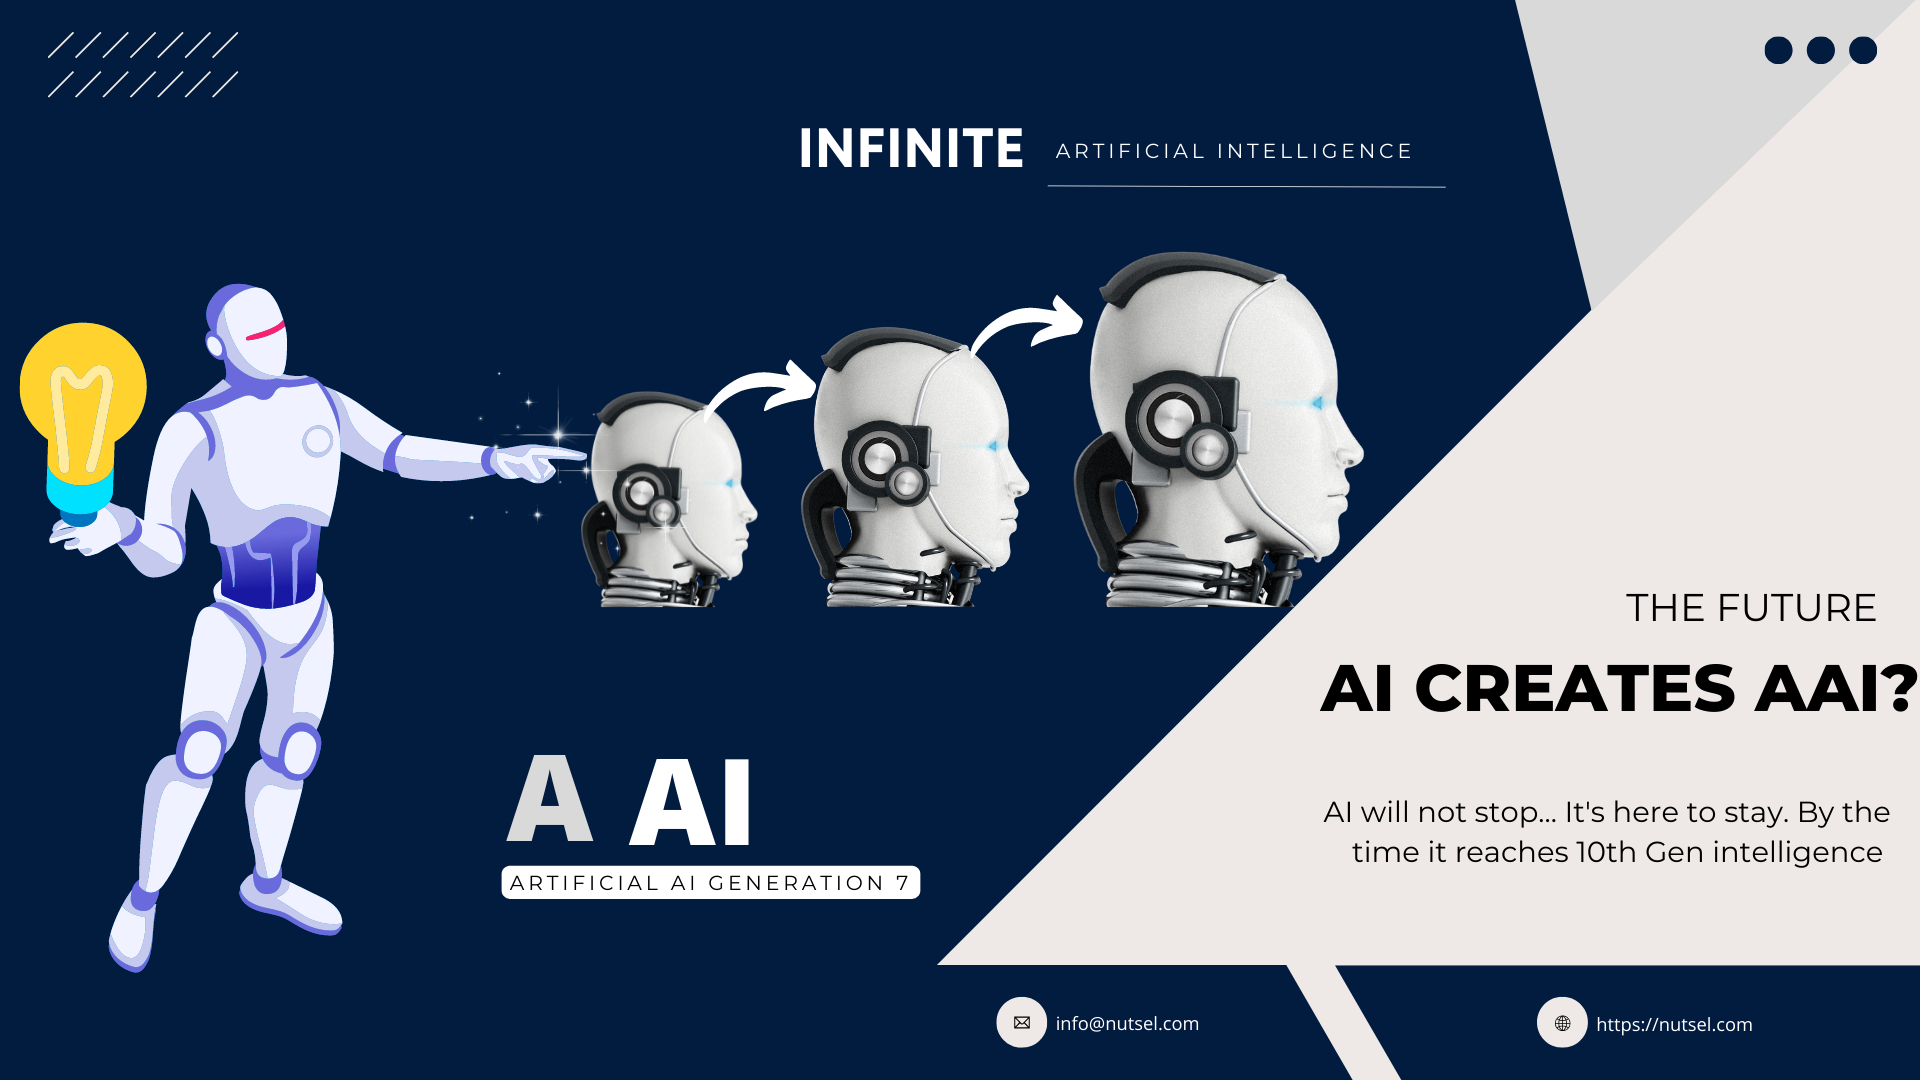 AI will create AAI